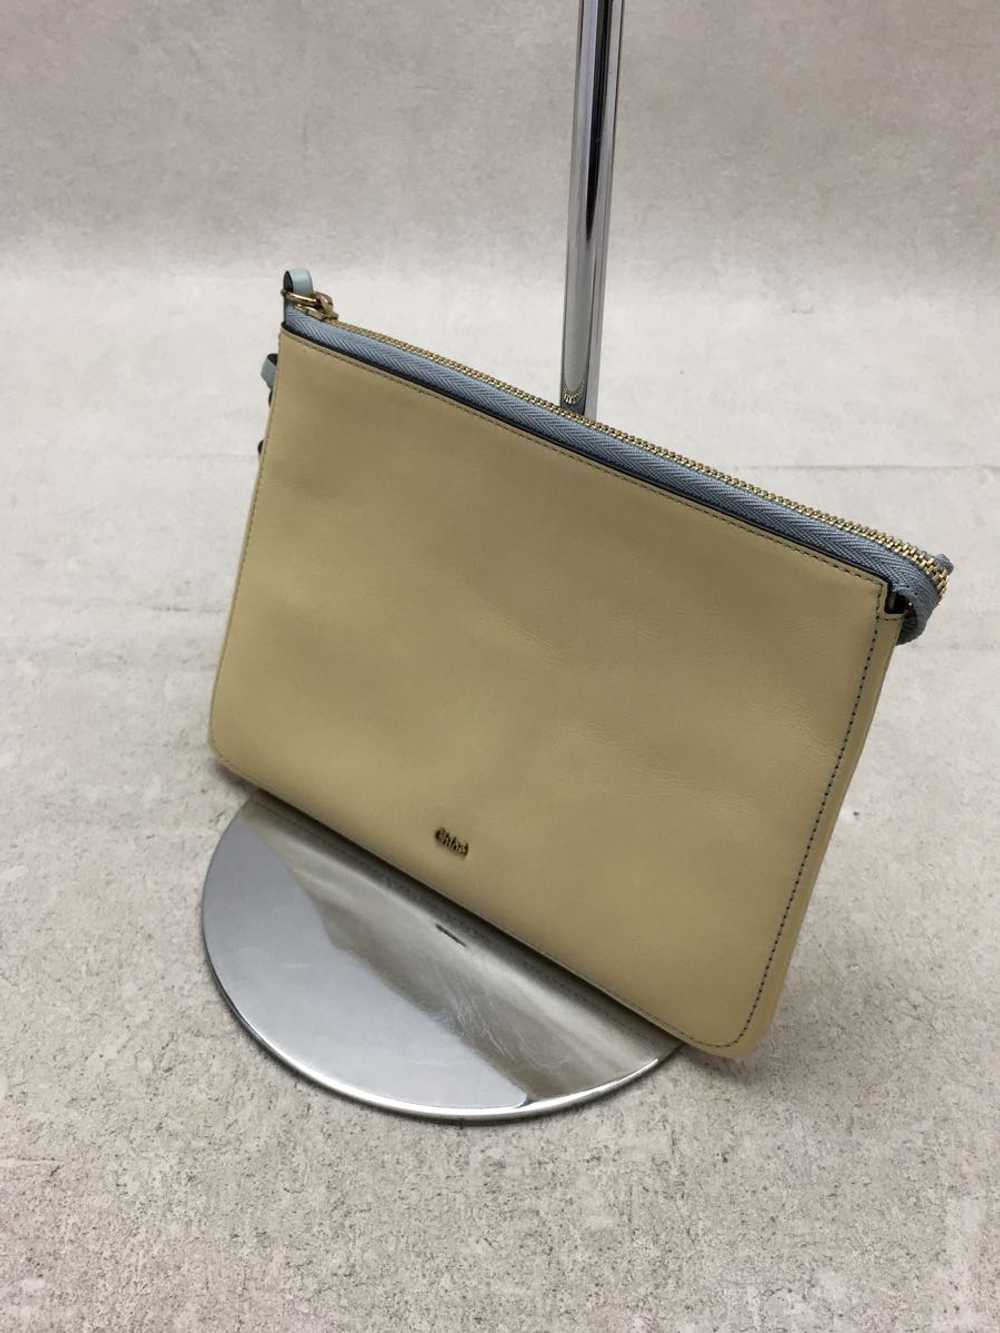 [Japan Used Bag] Used Chloe Pouch/--/Crm Bag - image 2